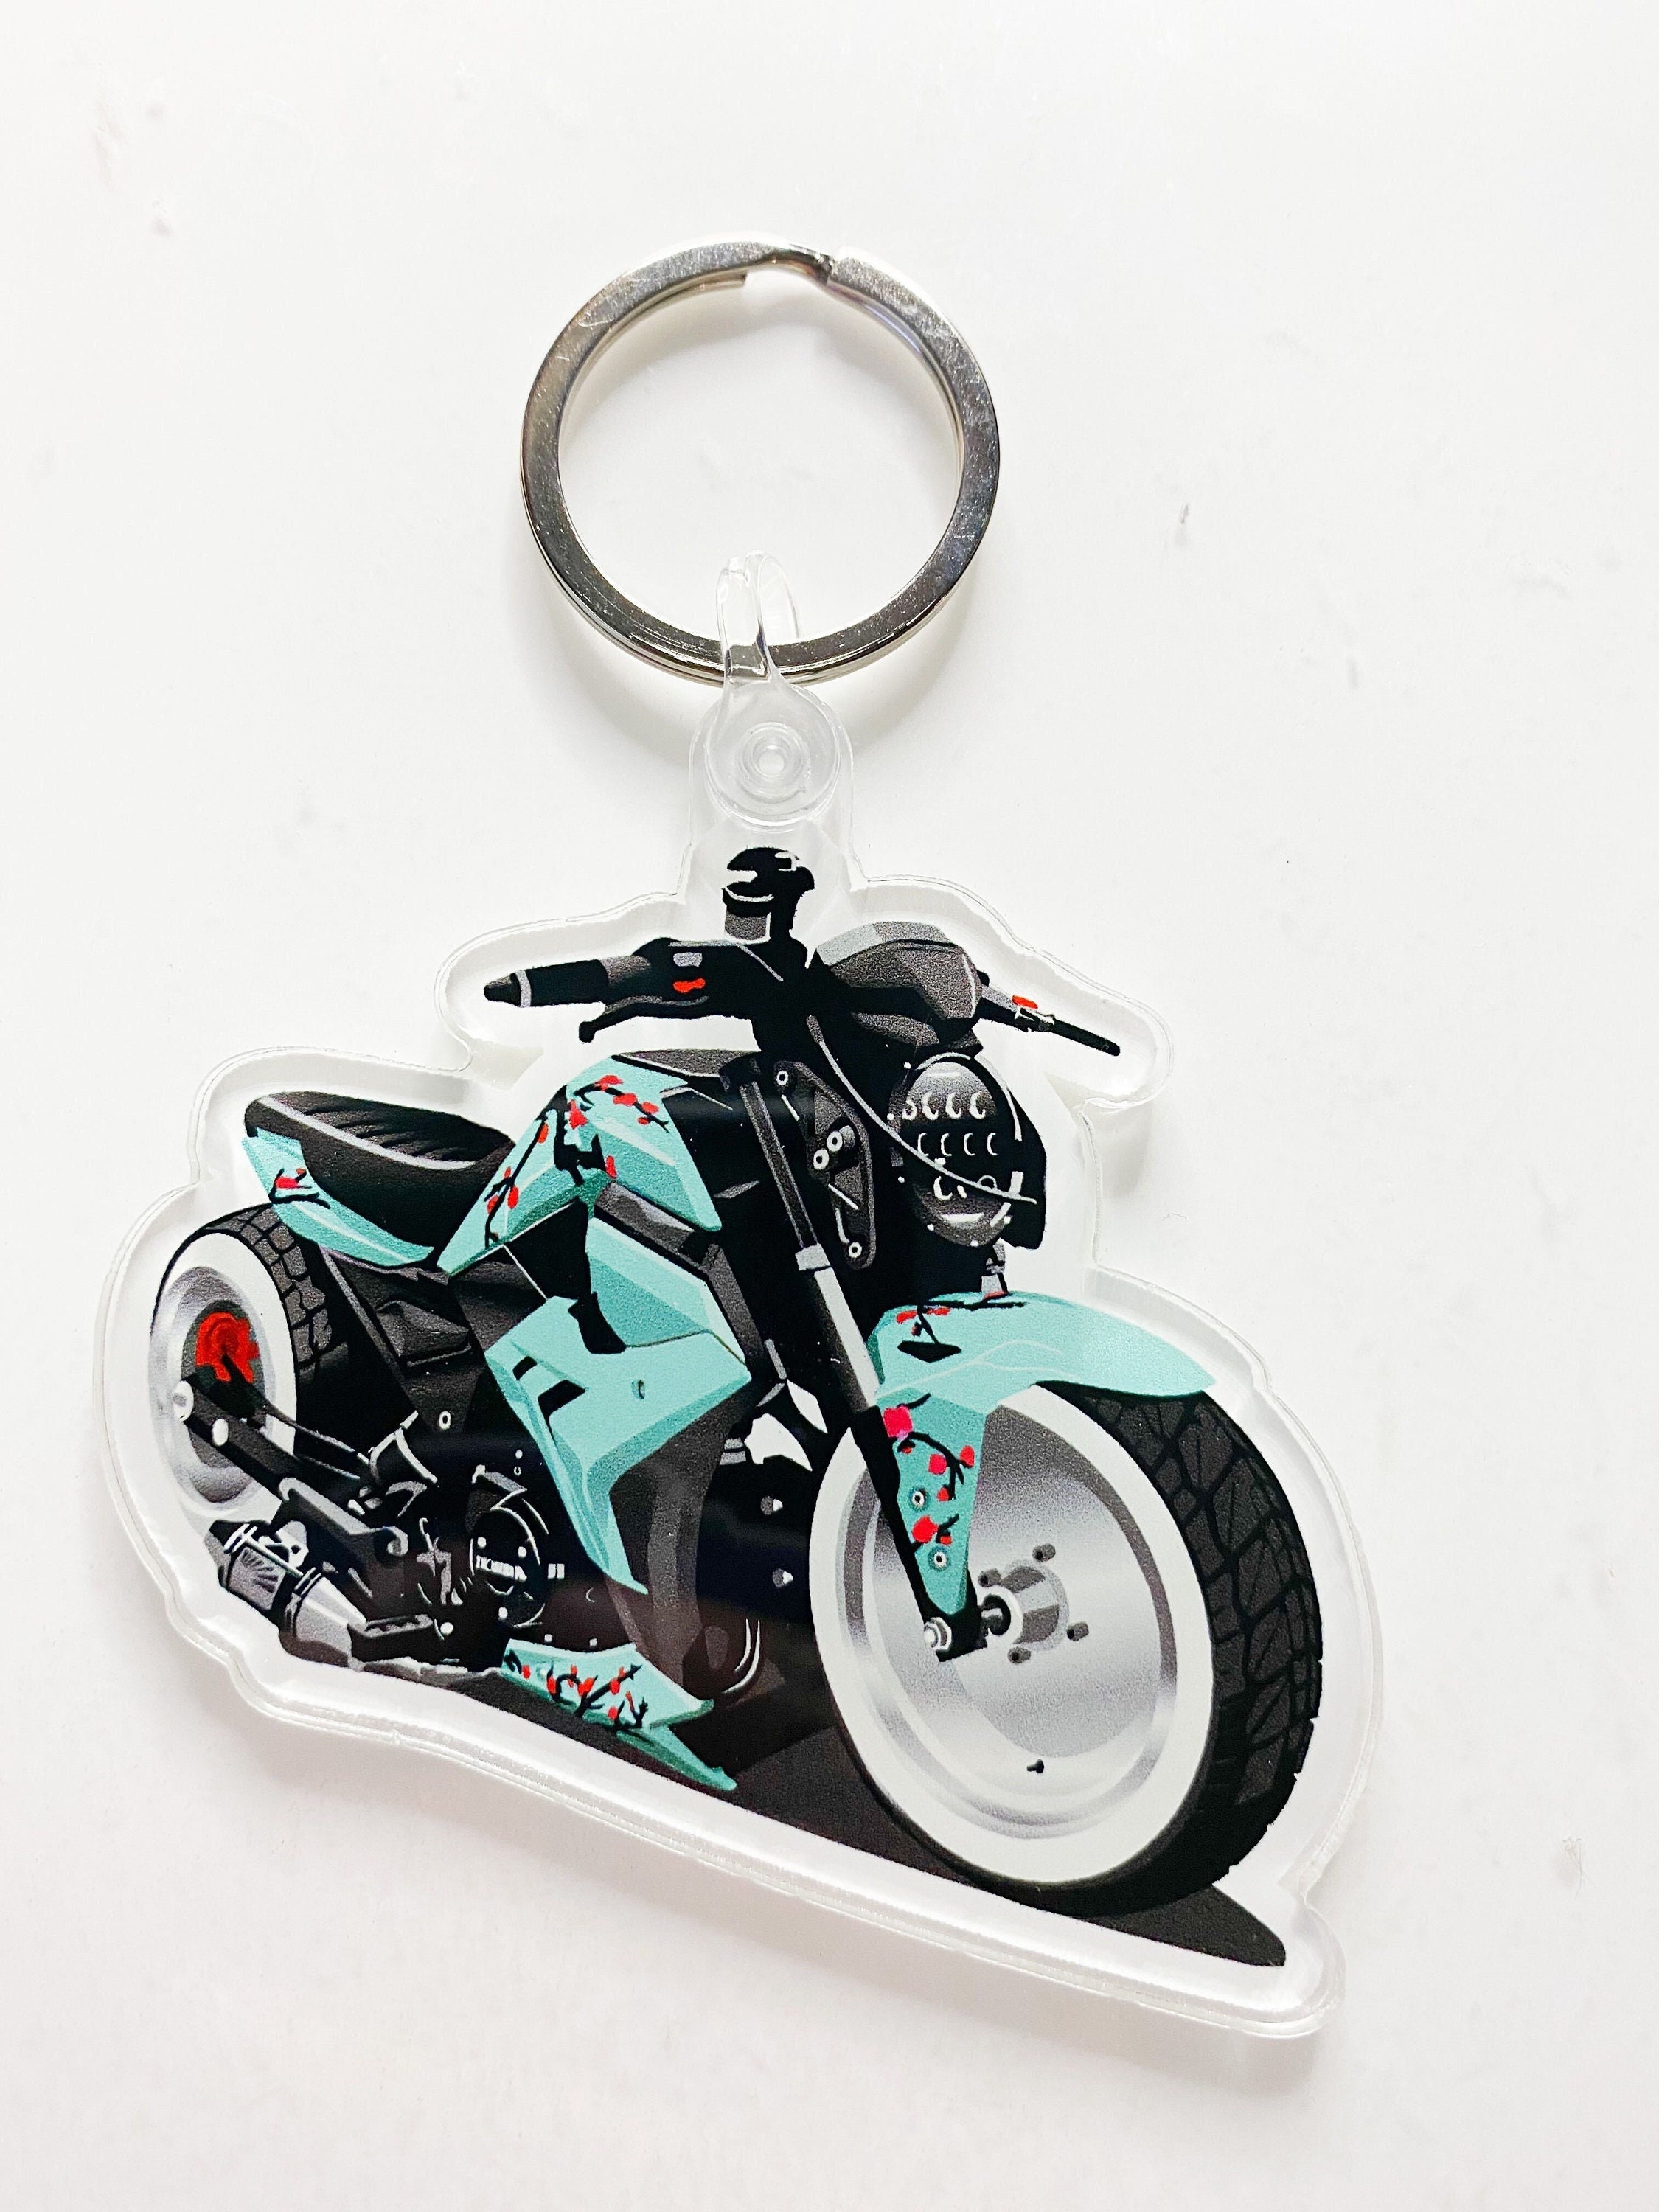 BMW Motorrad Ride & Style Kollektion 2020. Leather Keychain. (11/2019)